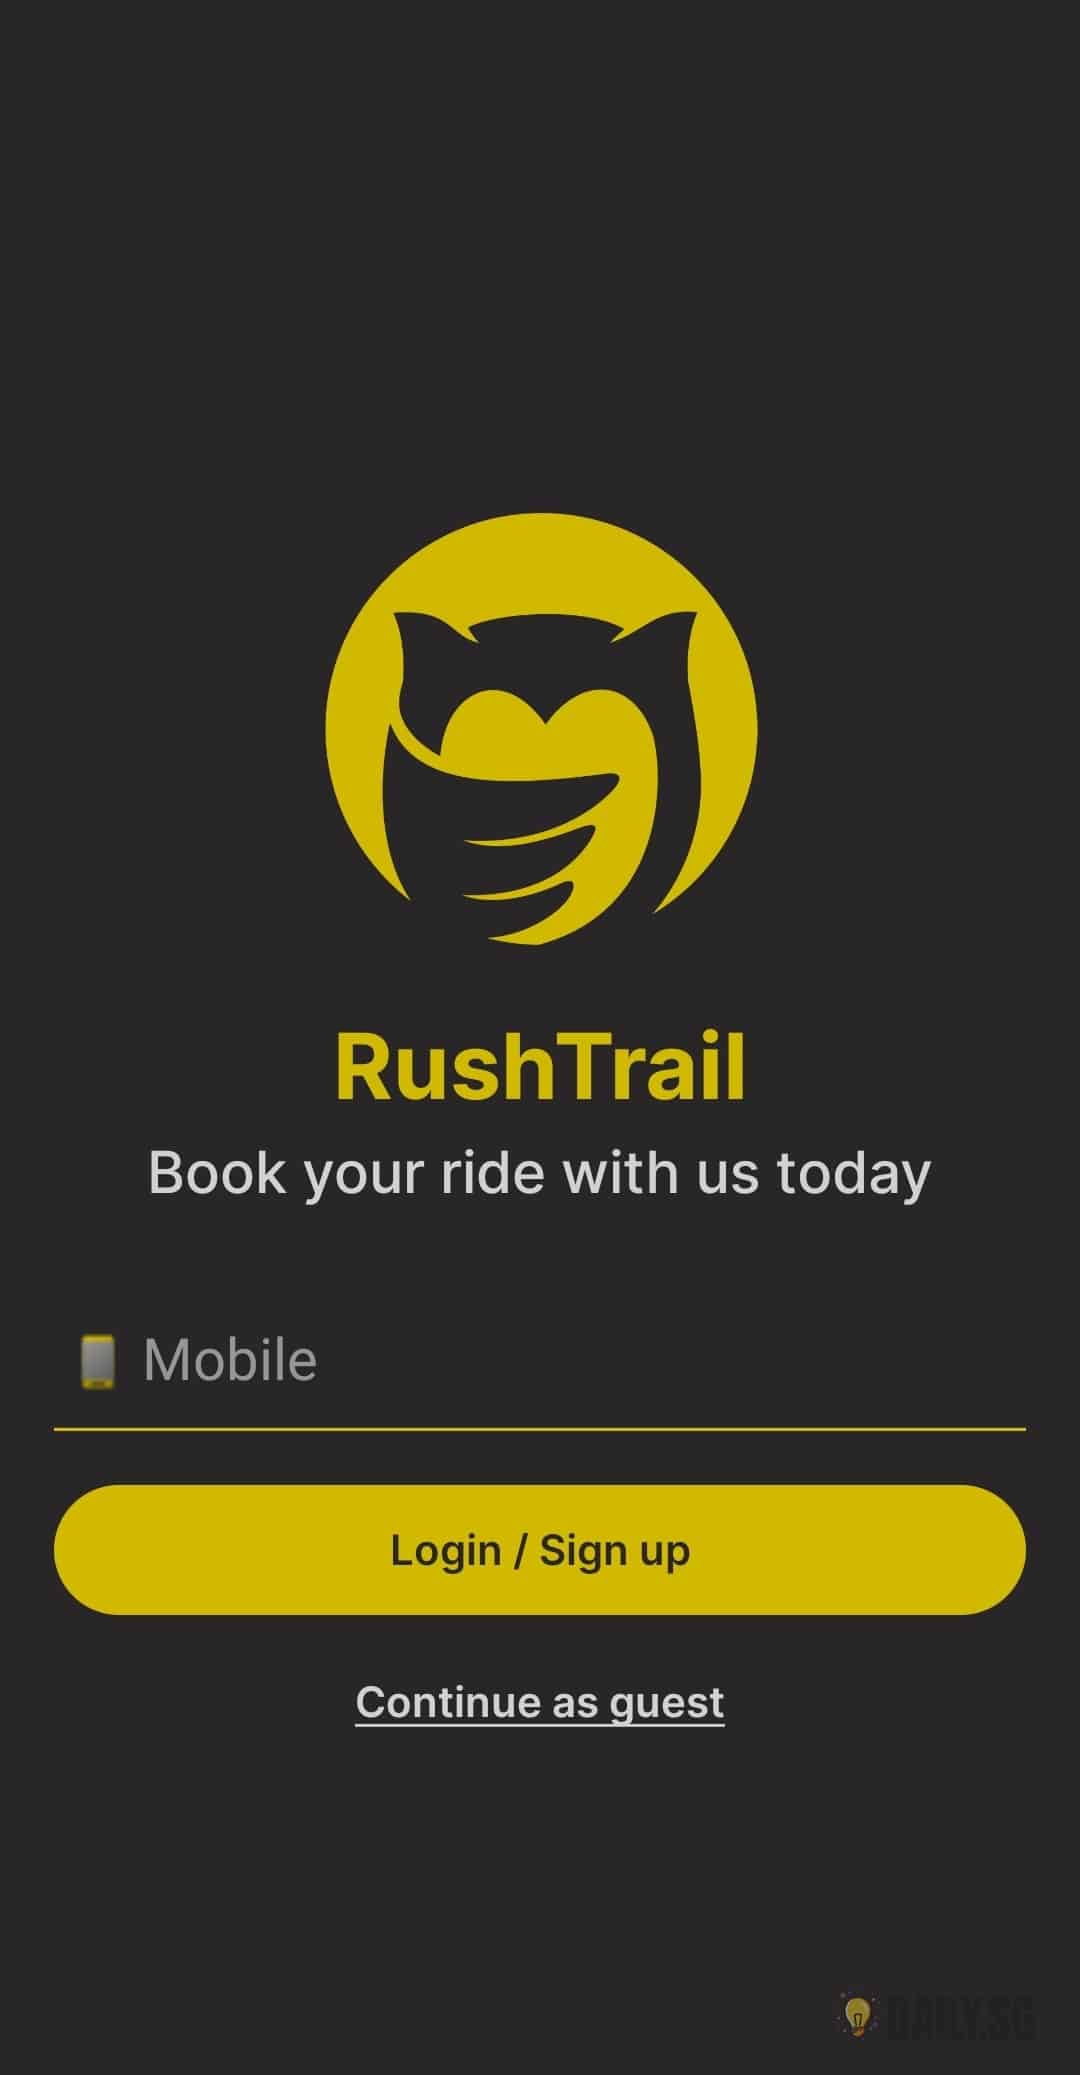 RushTrail - Step 1 Signup